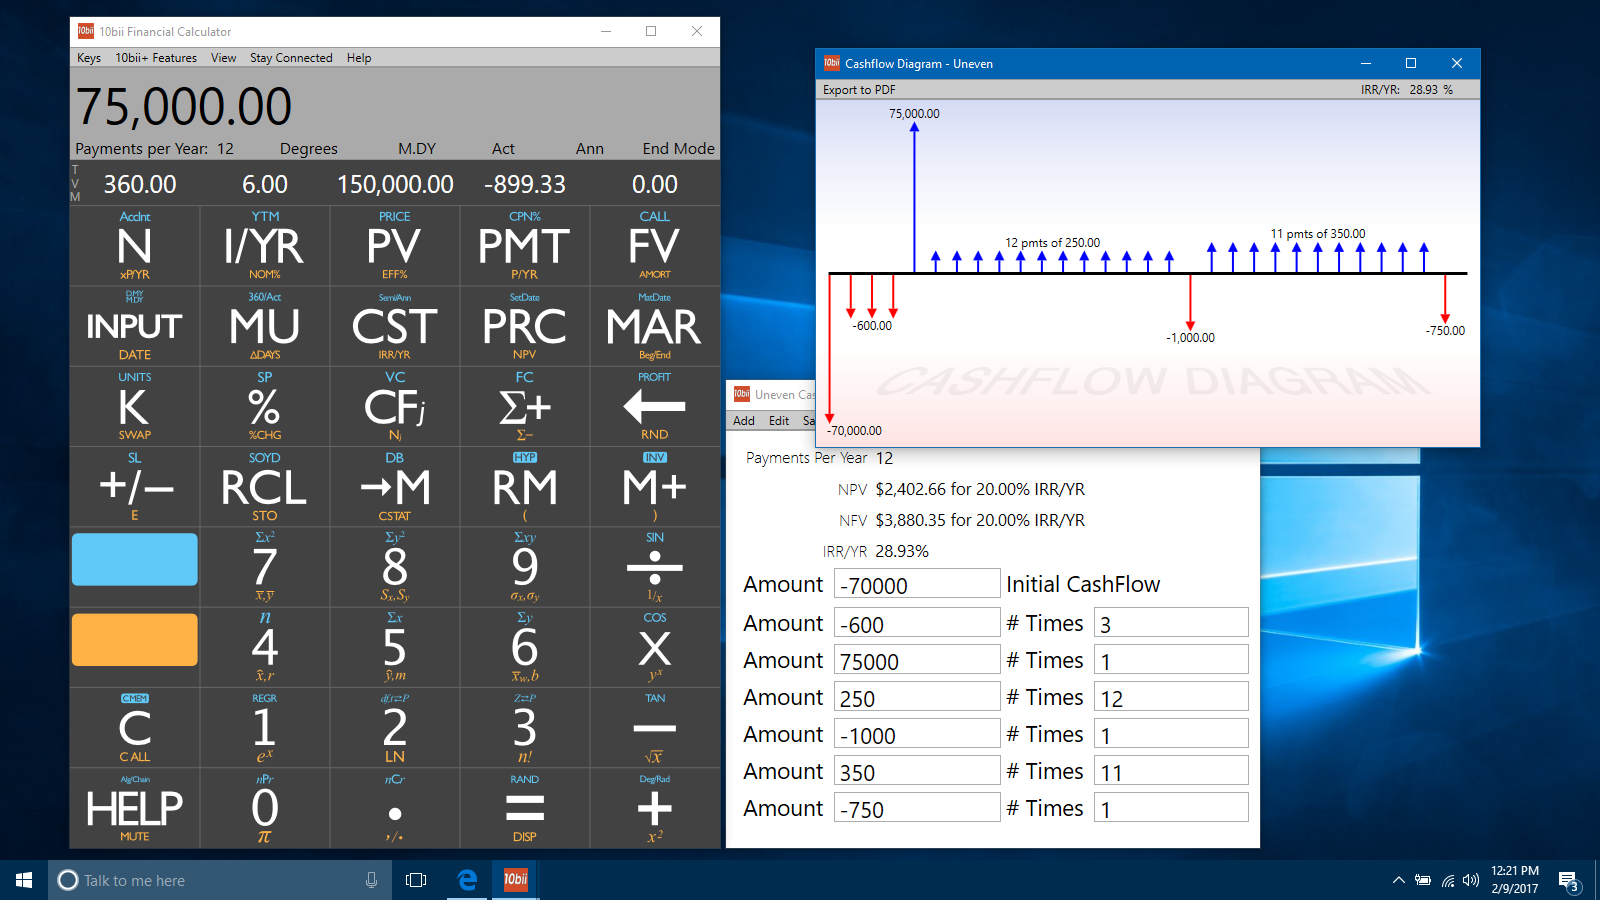 10bii Financial Calculator App For Windows